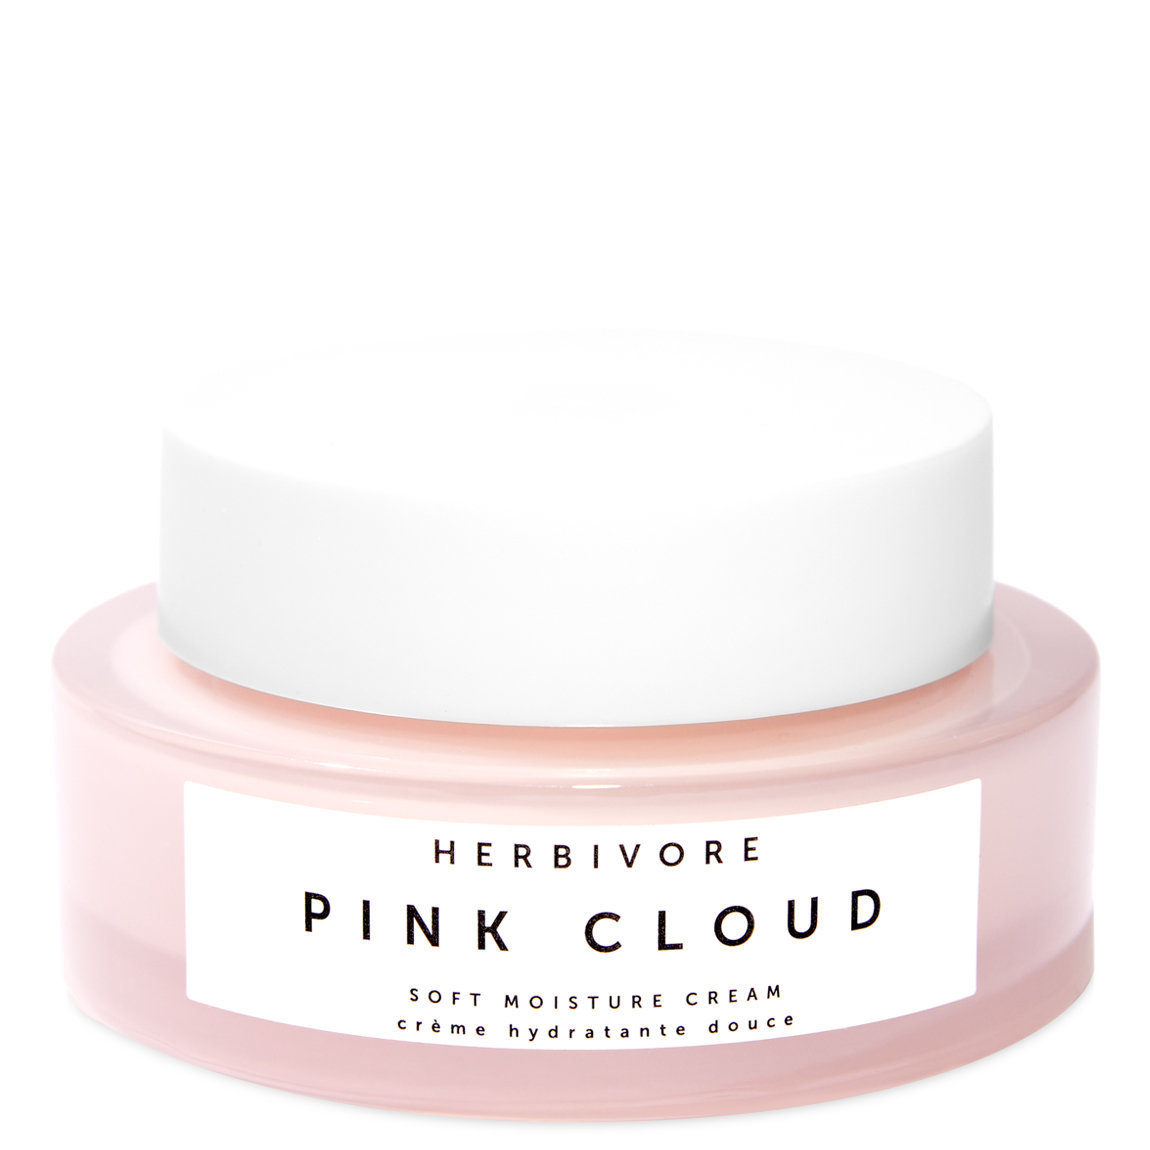 Herbivore Pink Cloud Soft Moisture Cream alternative view 1 - product swatch.